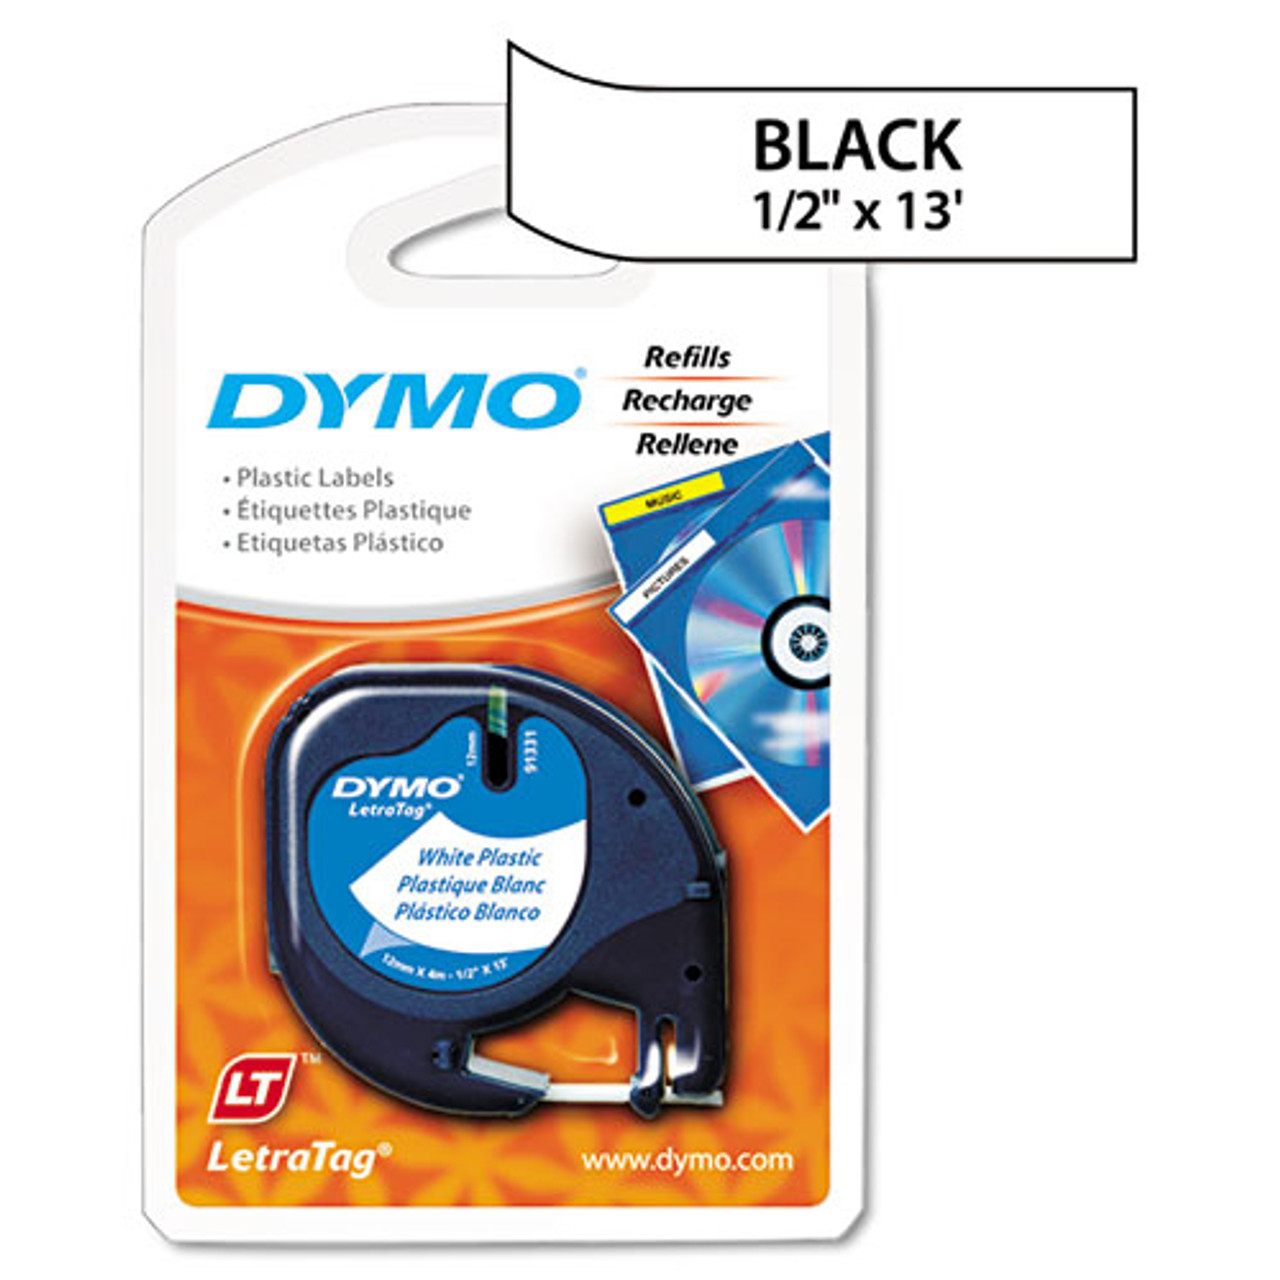 10PK Dymo LetraTag Refills White Plastic 91331 for LetraTag Label